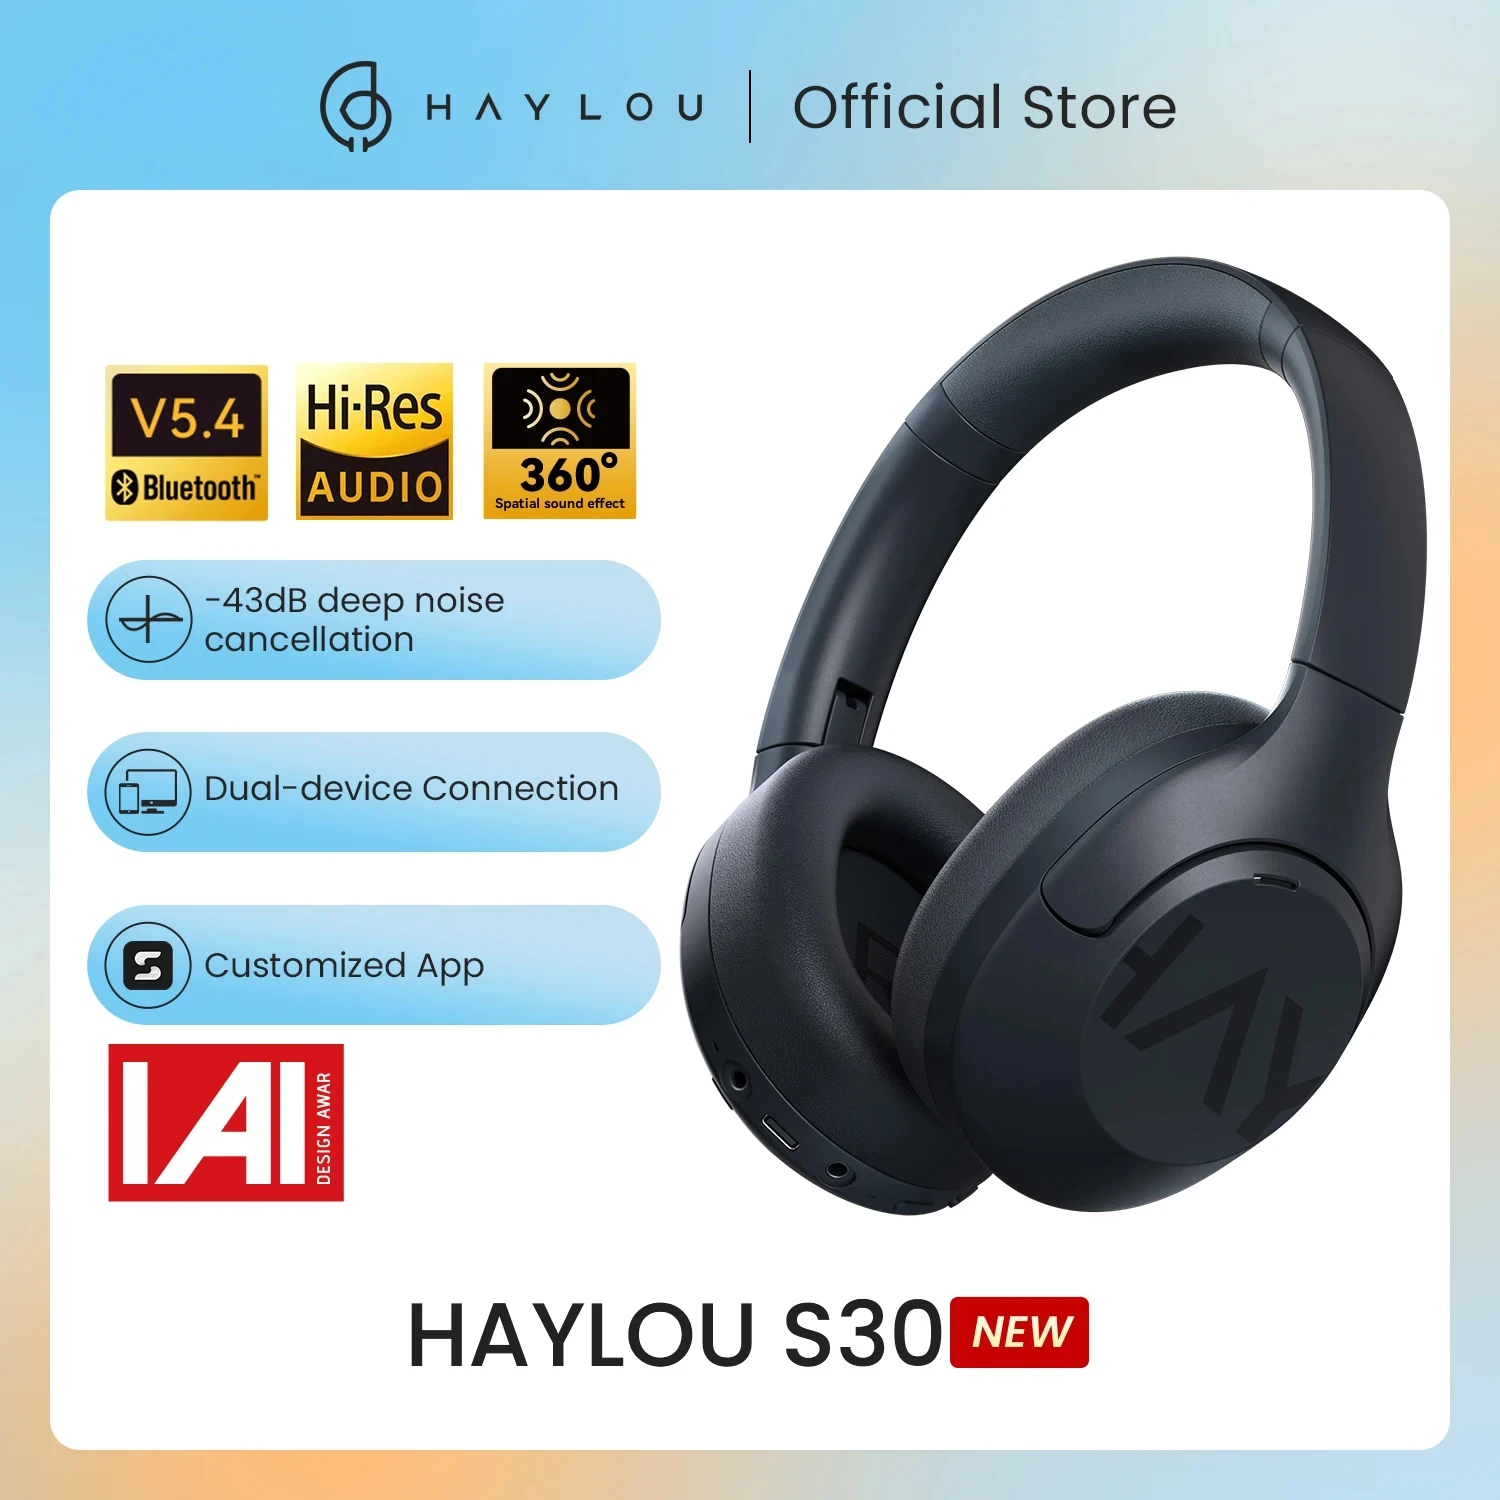 HAYLOU S30 무선 블루투스 5.4 헤드폰, 43dB 적응형 노이즈 캔슬링 헤드셋, 40mm 드라이버, 80H 재생 시간 이어폰